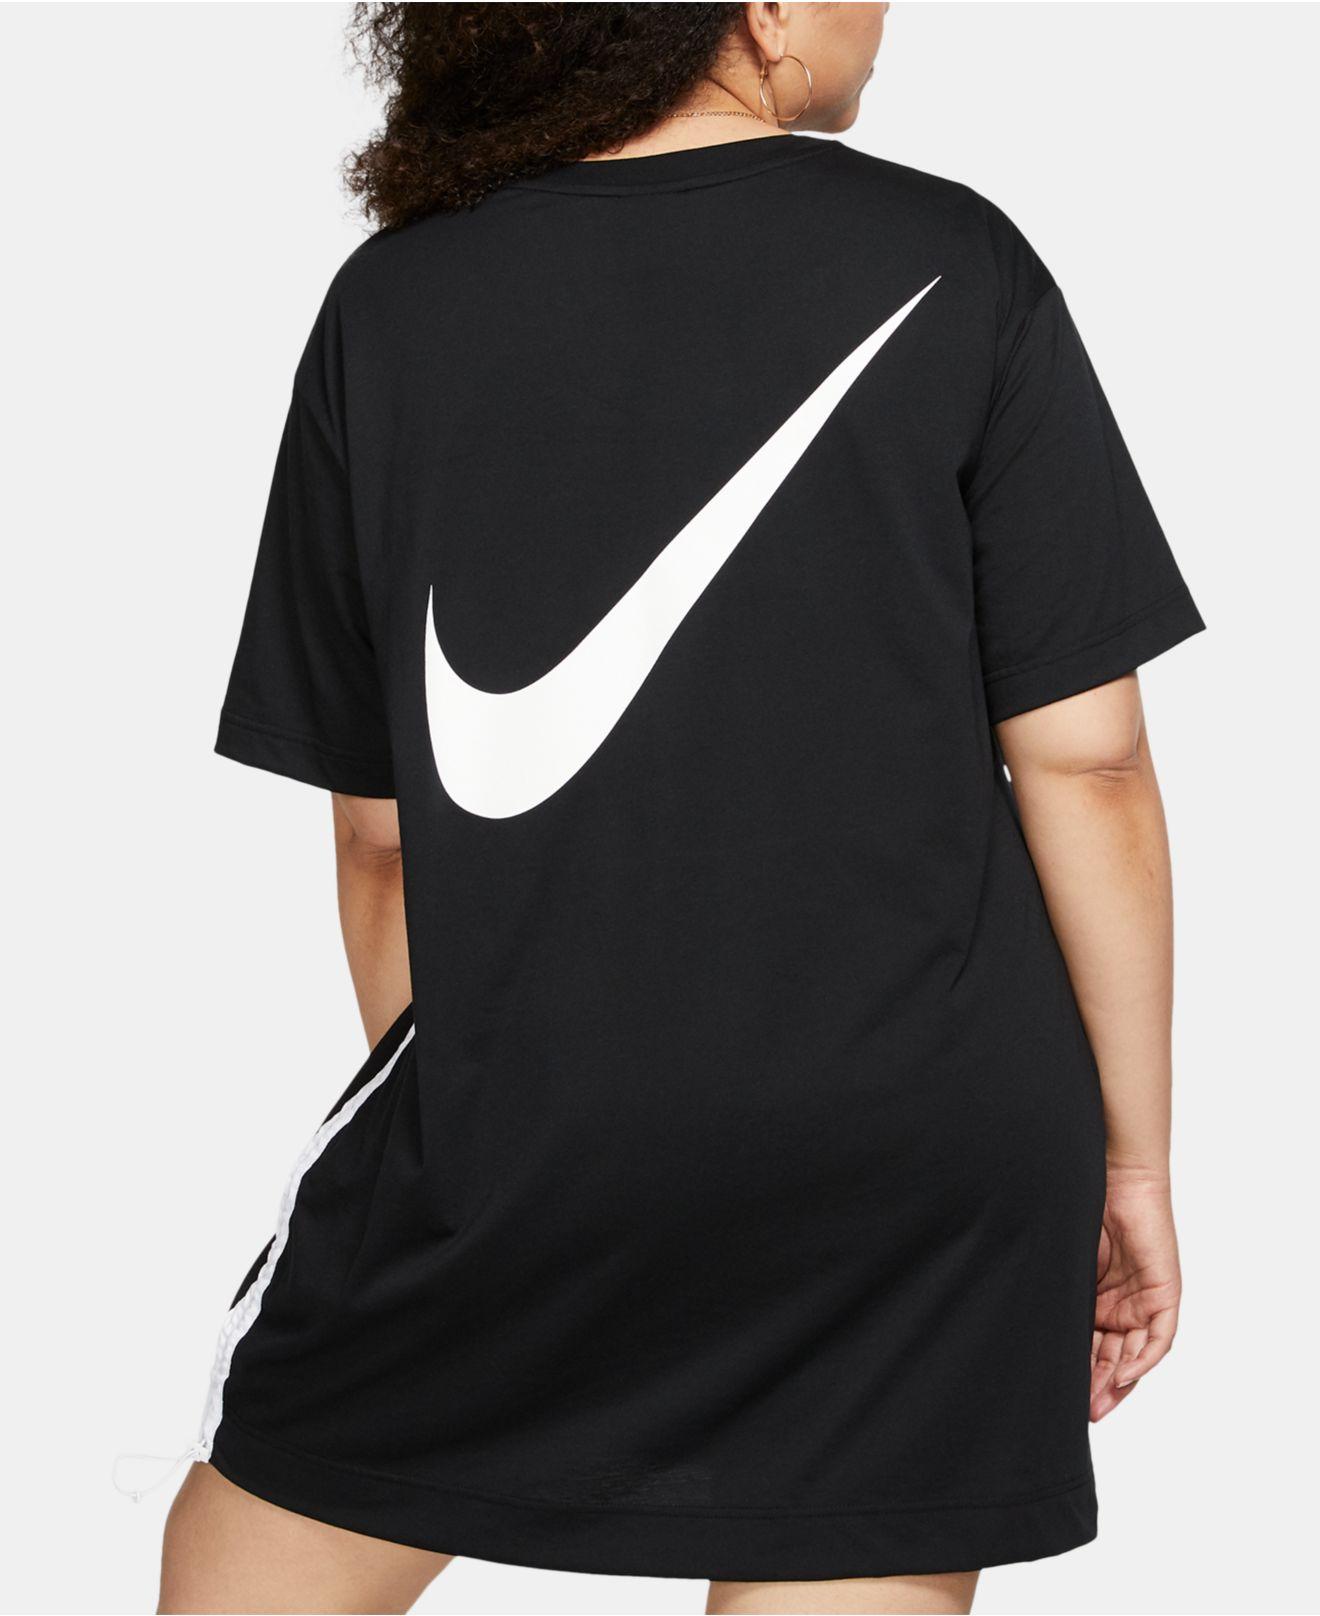 Nike Synthetic Plus Size Logo T-shirt Dress in Black/White (Black) | Lyst